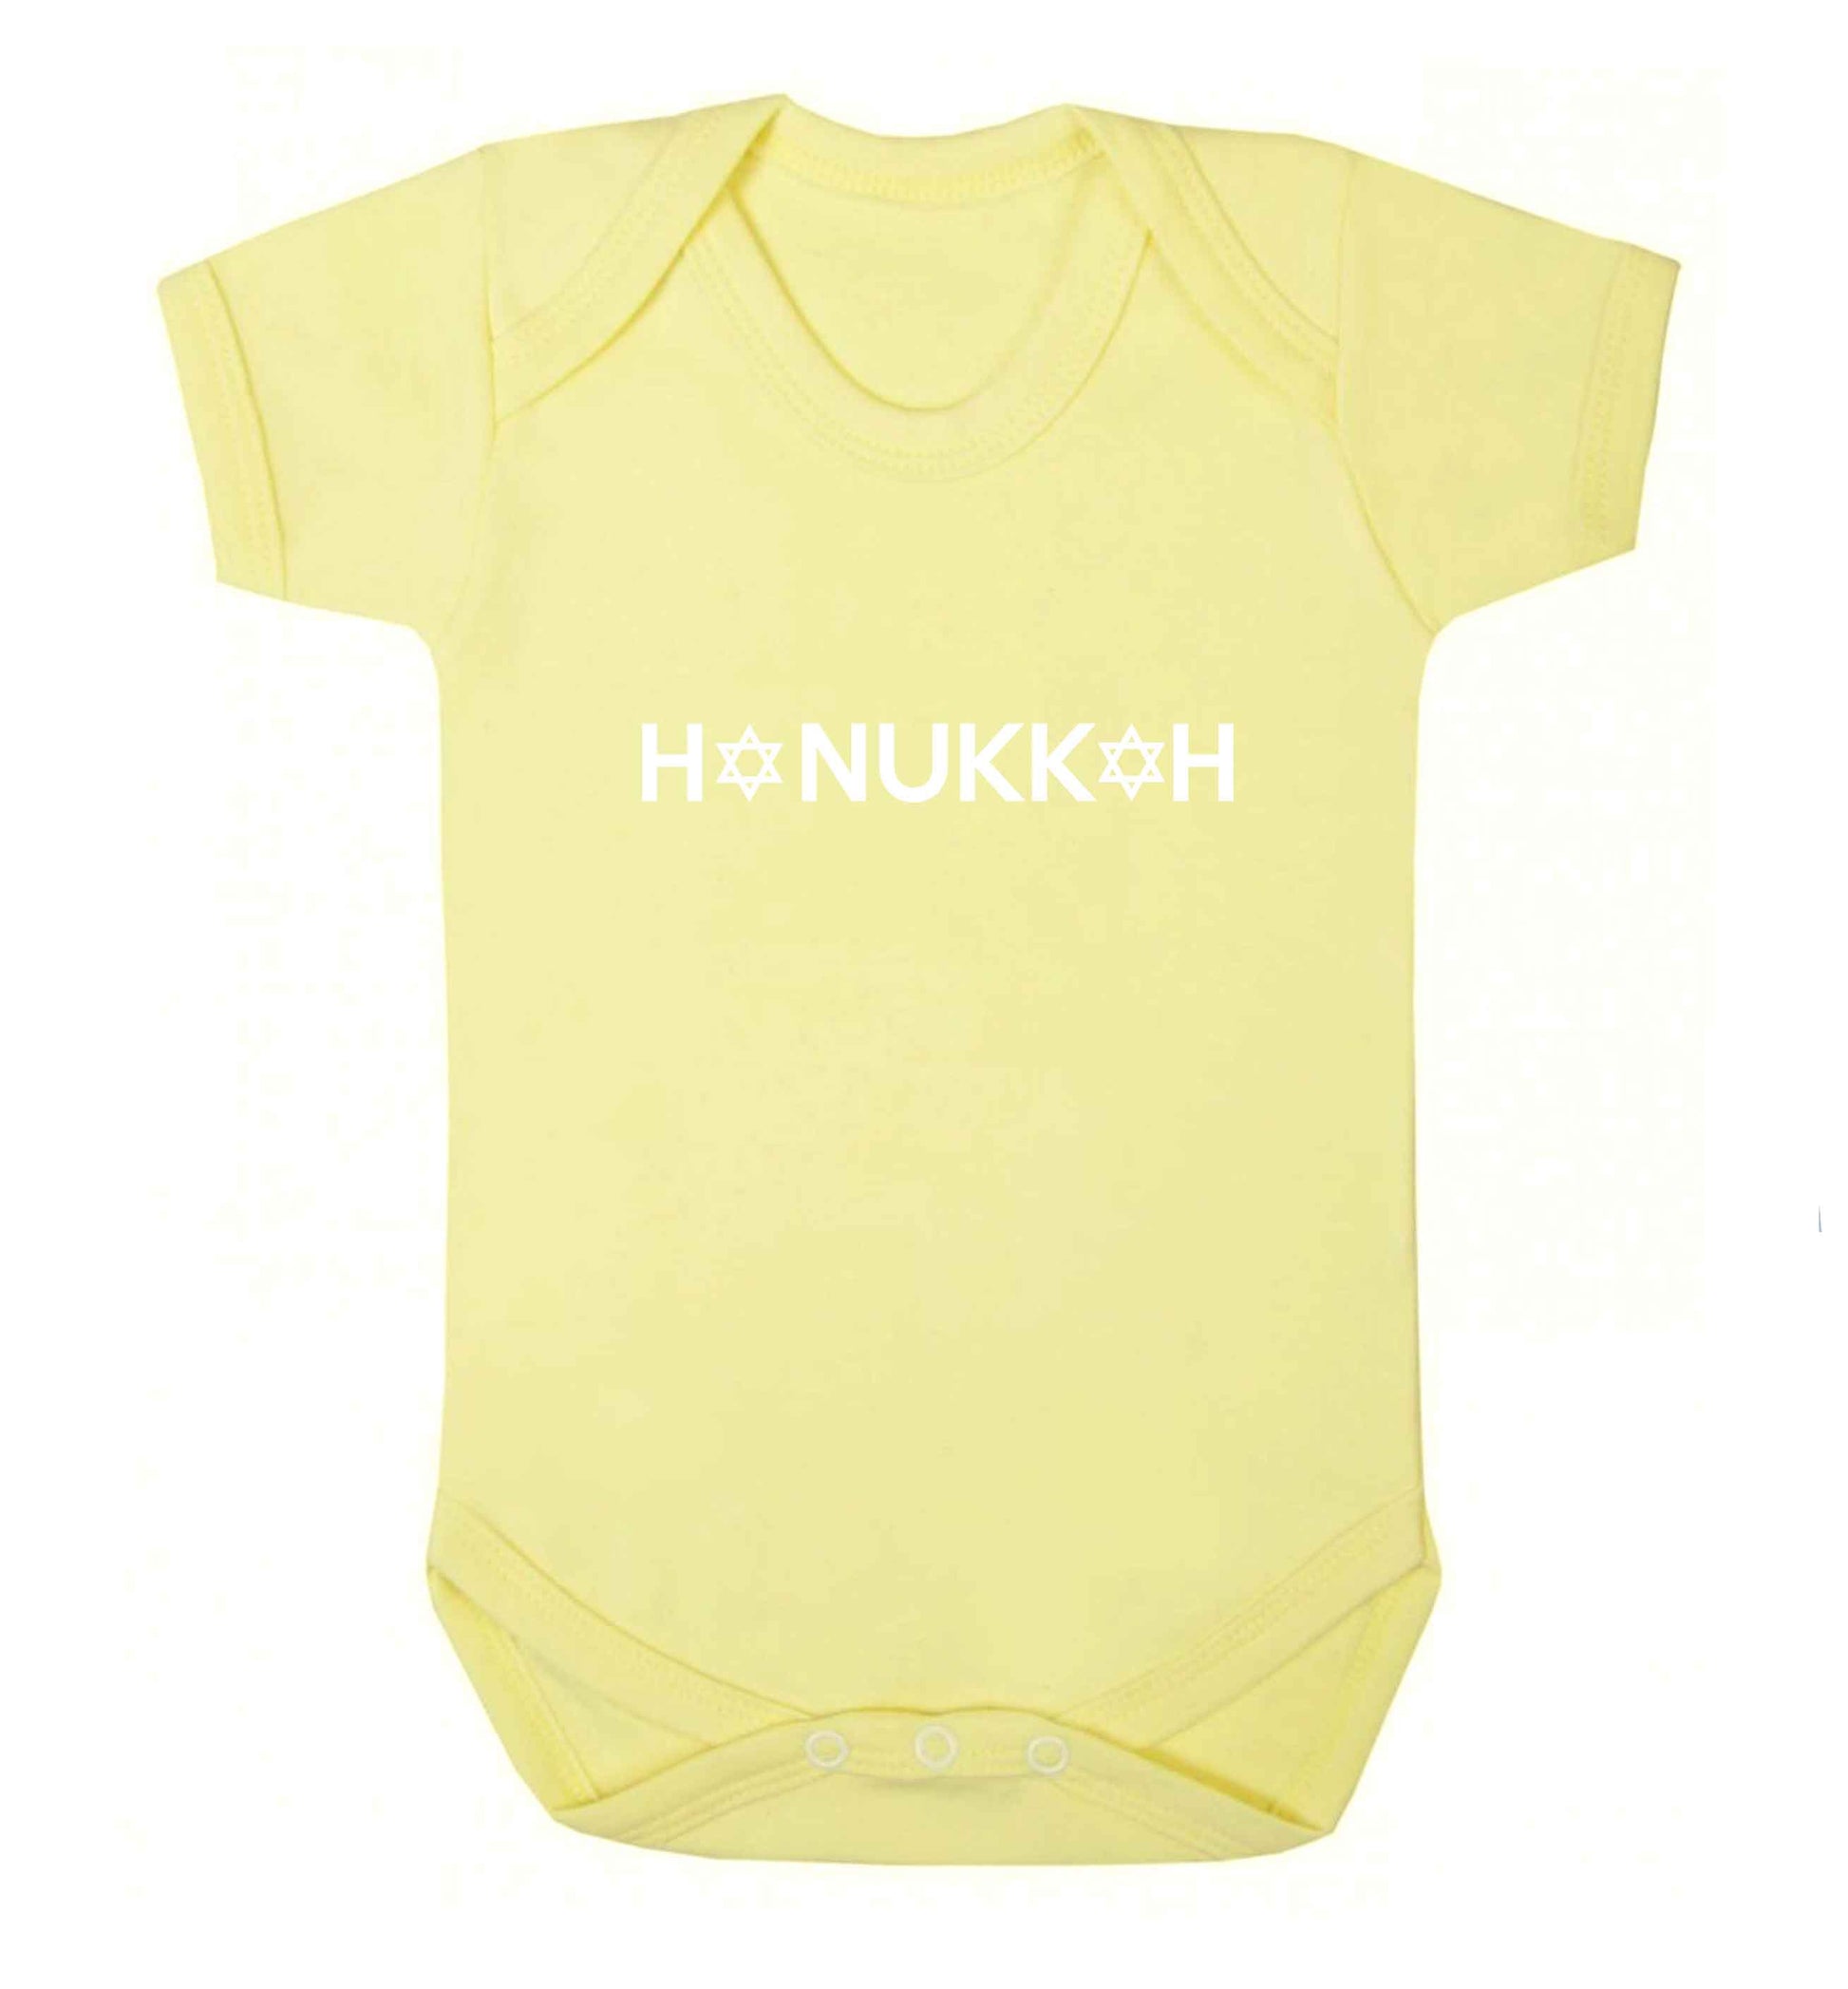 Hanukkah star of david baby vest pale yellow 18-24 months